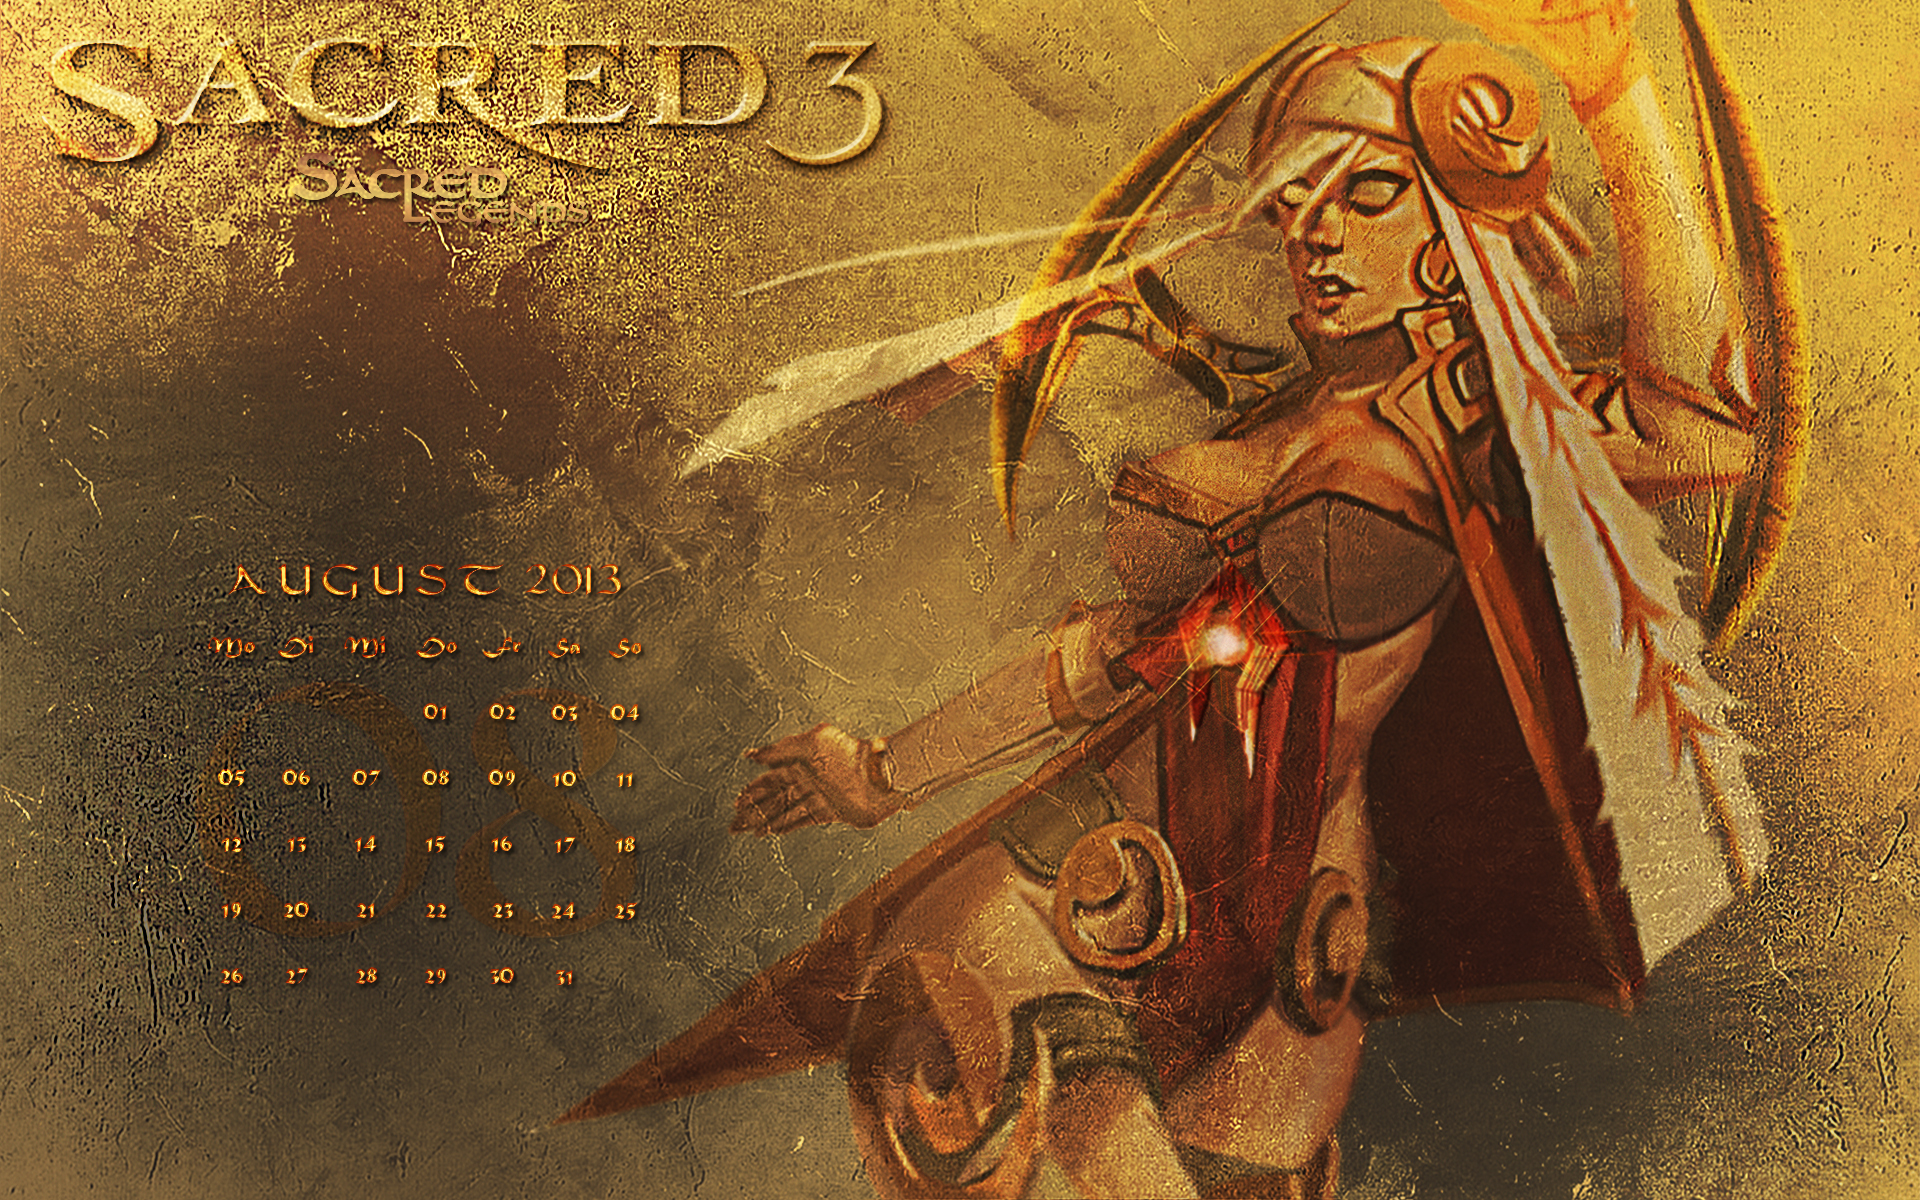 sacred_citadel_calendar_august2013_1920x1200